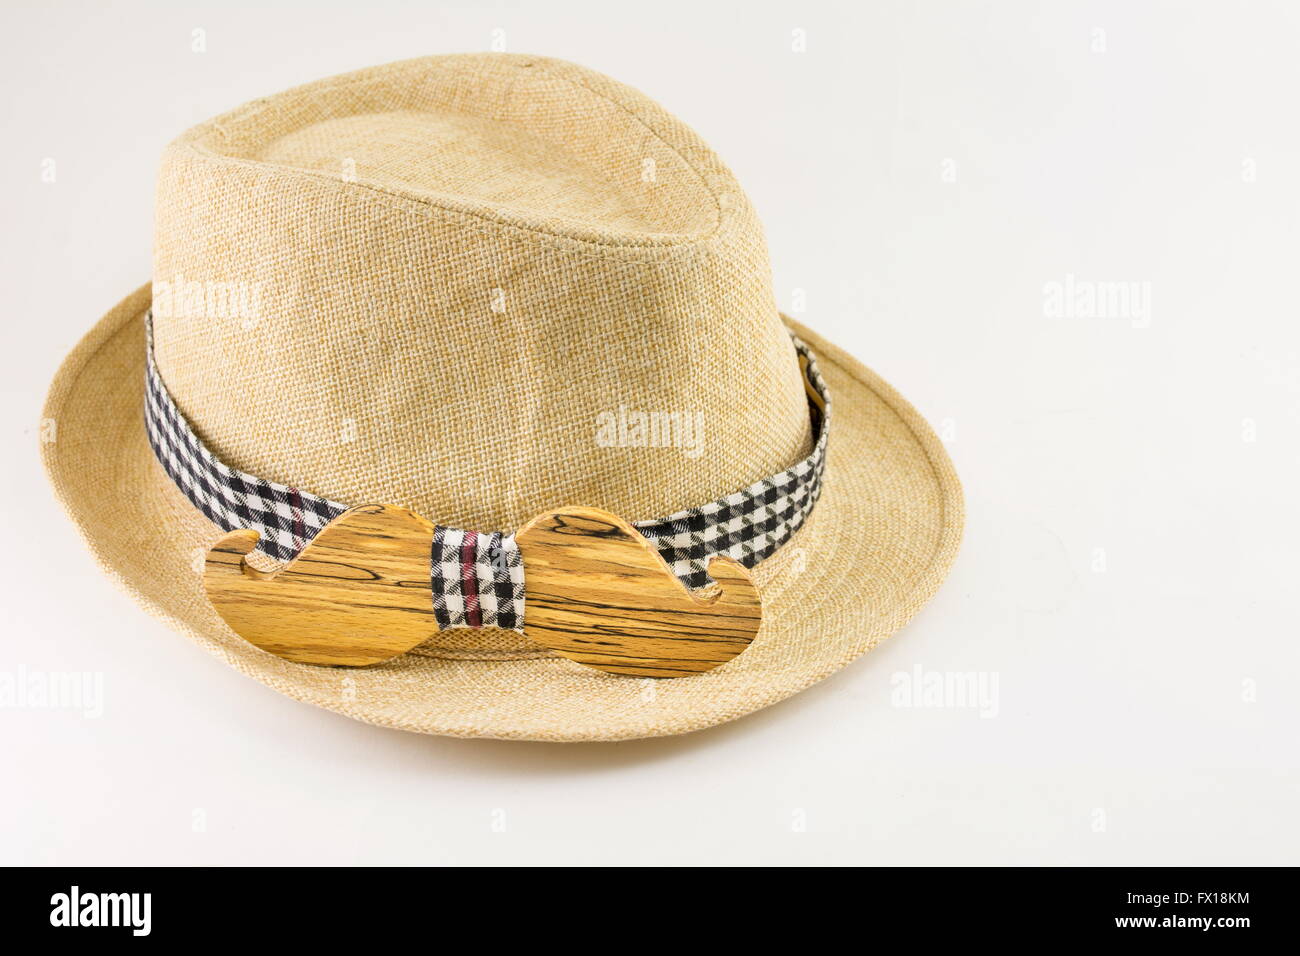 Wooden bow tie around a hat. Man accessories Stock Photo